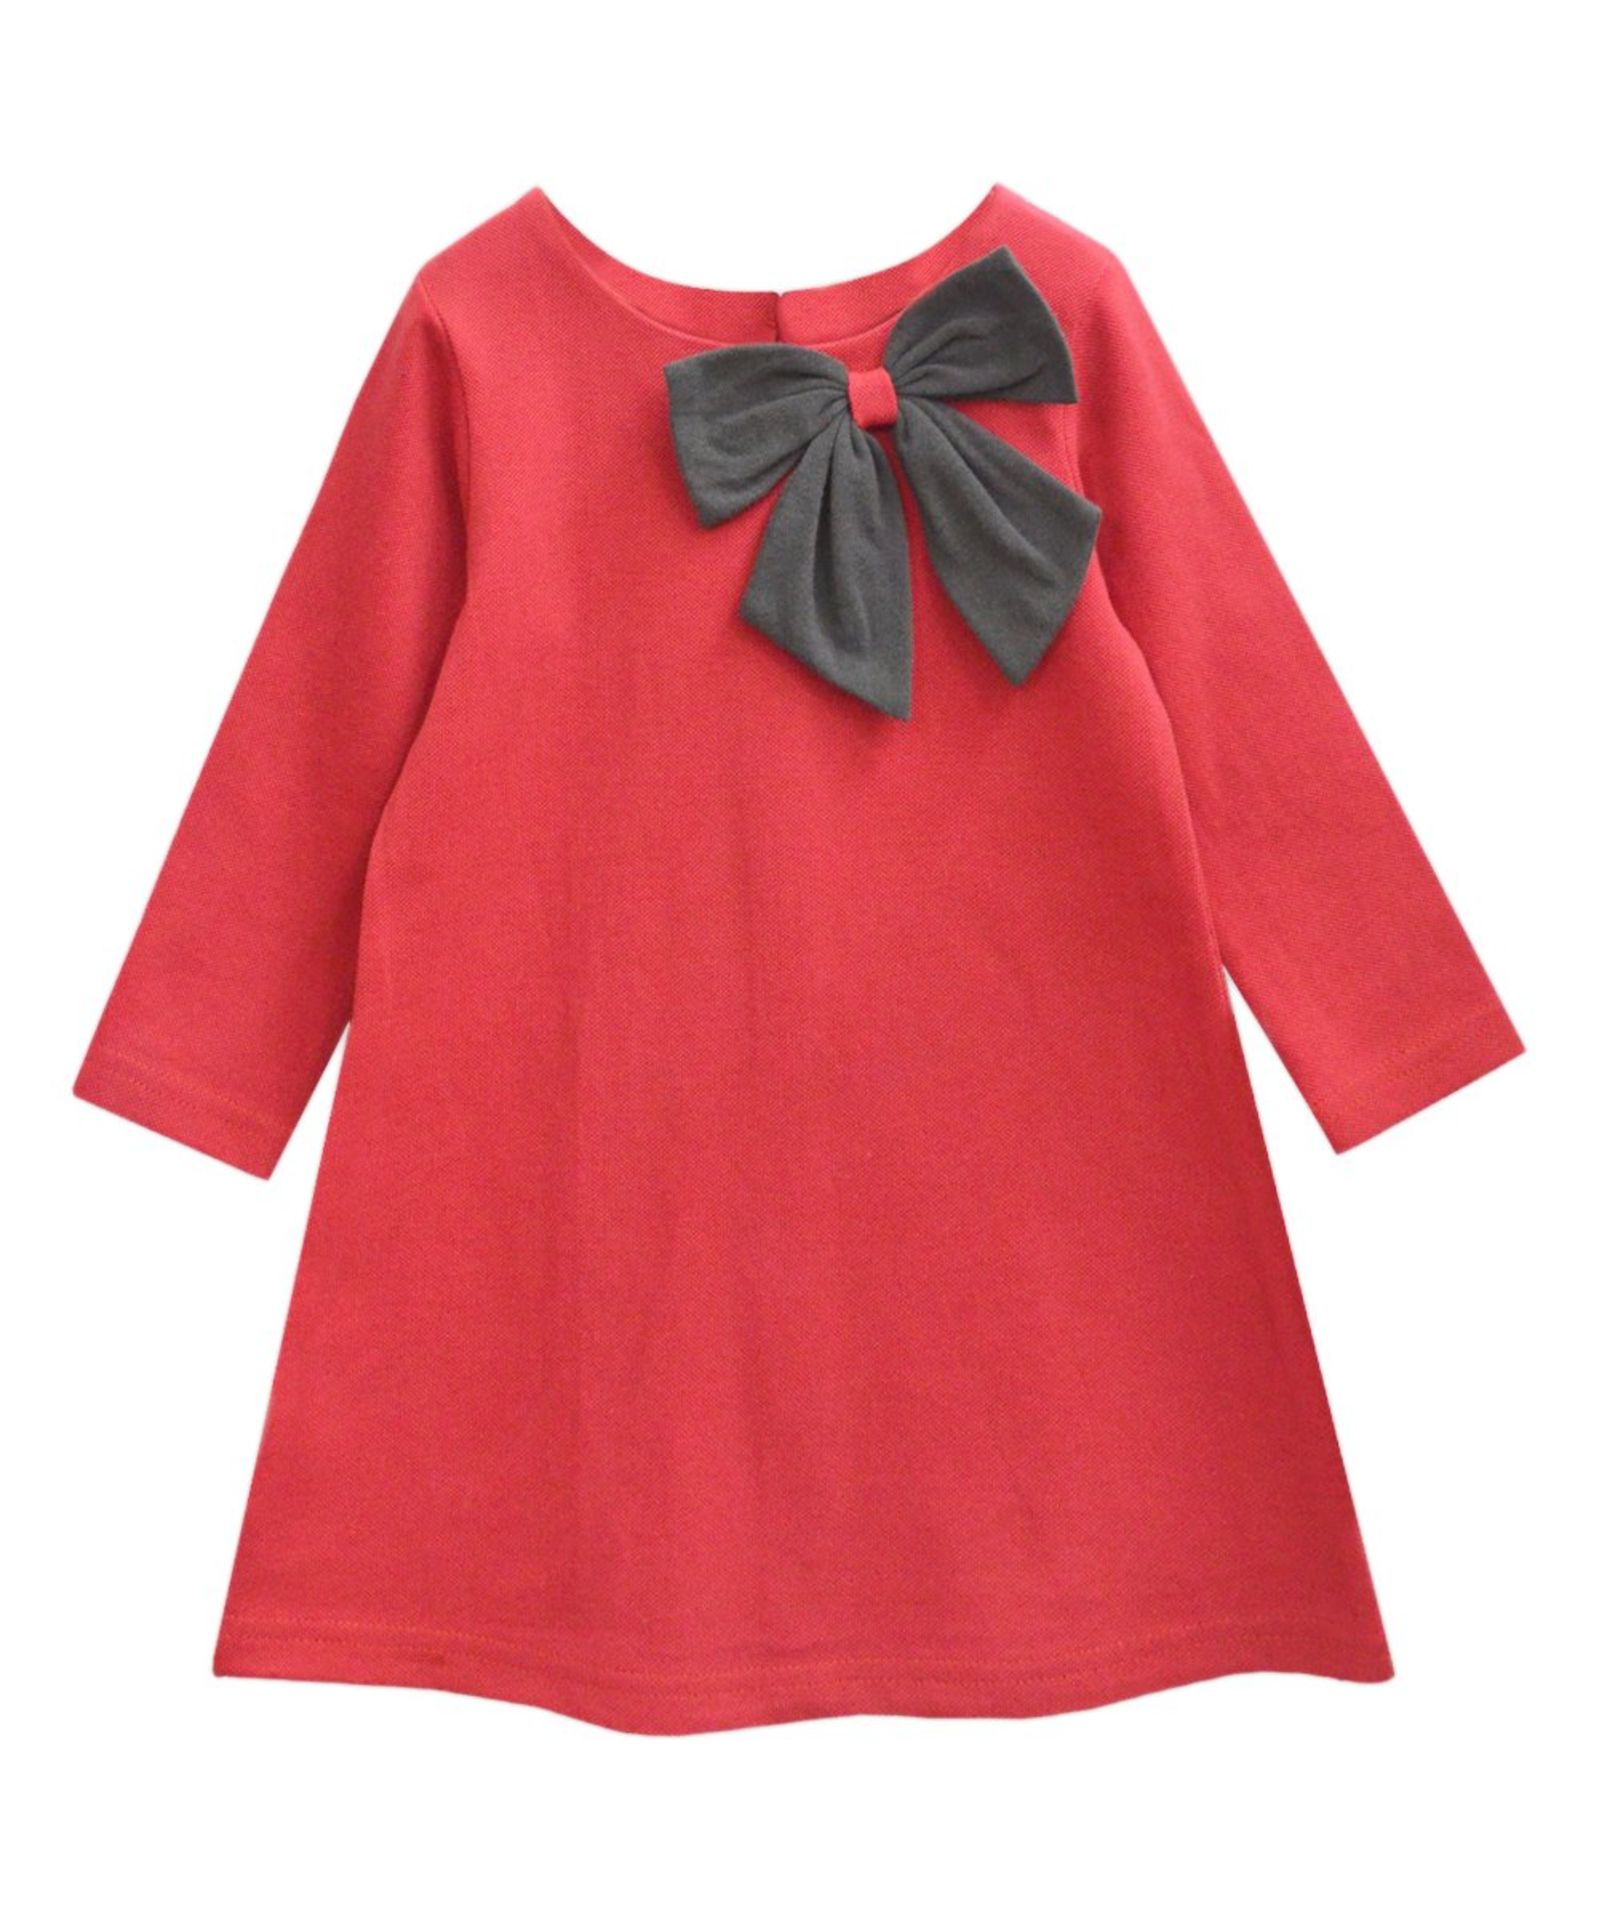 Scarlet & Brown Bow Pointelle Aurora Dress - Infant, Toddler & Girls